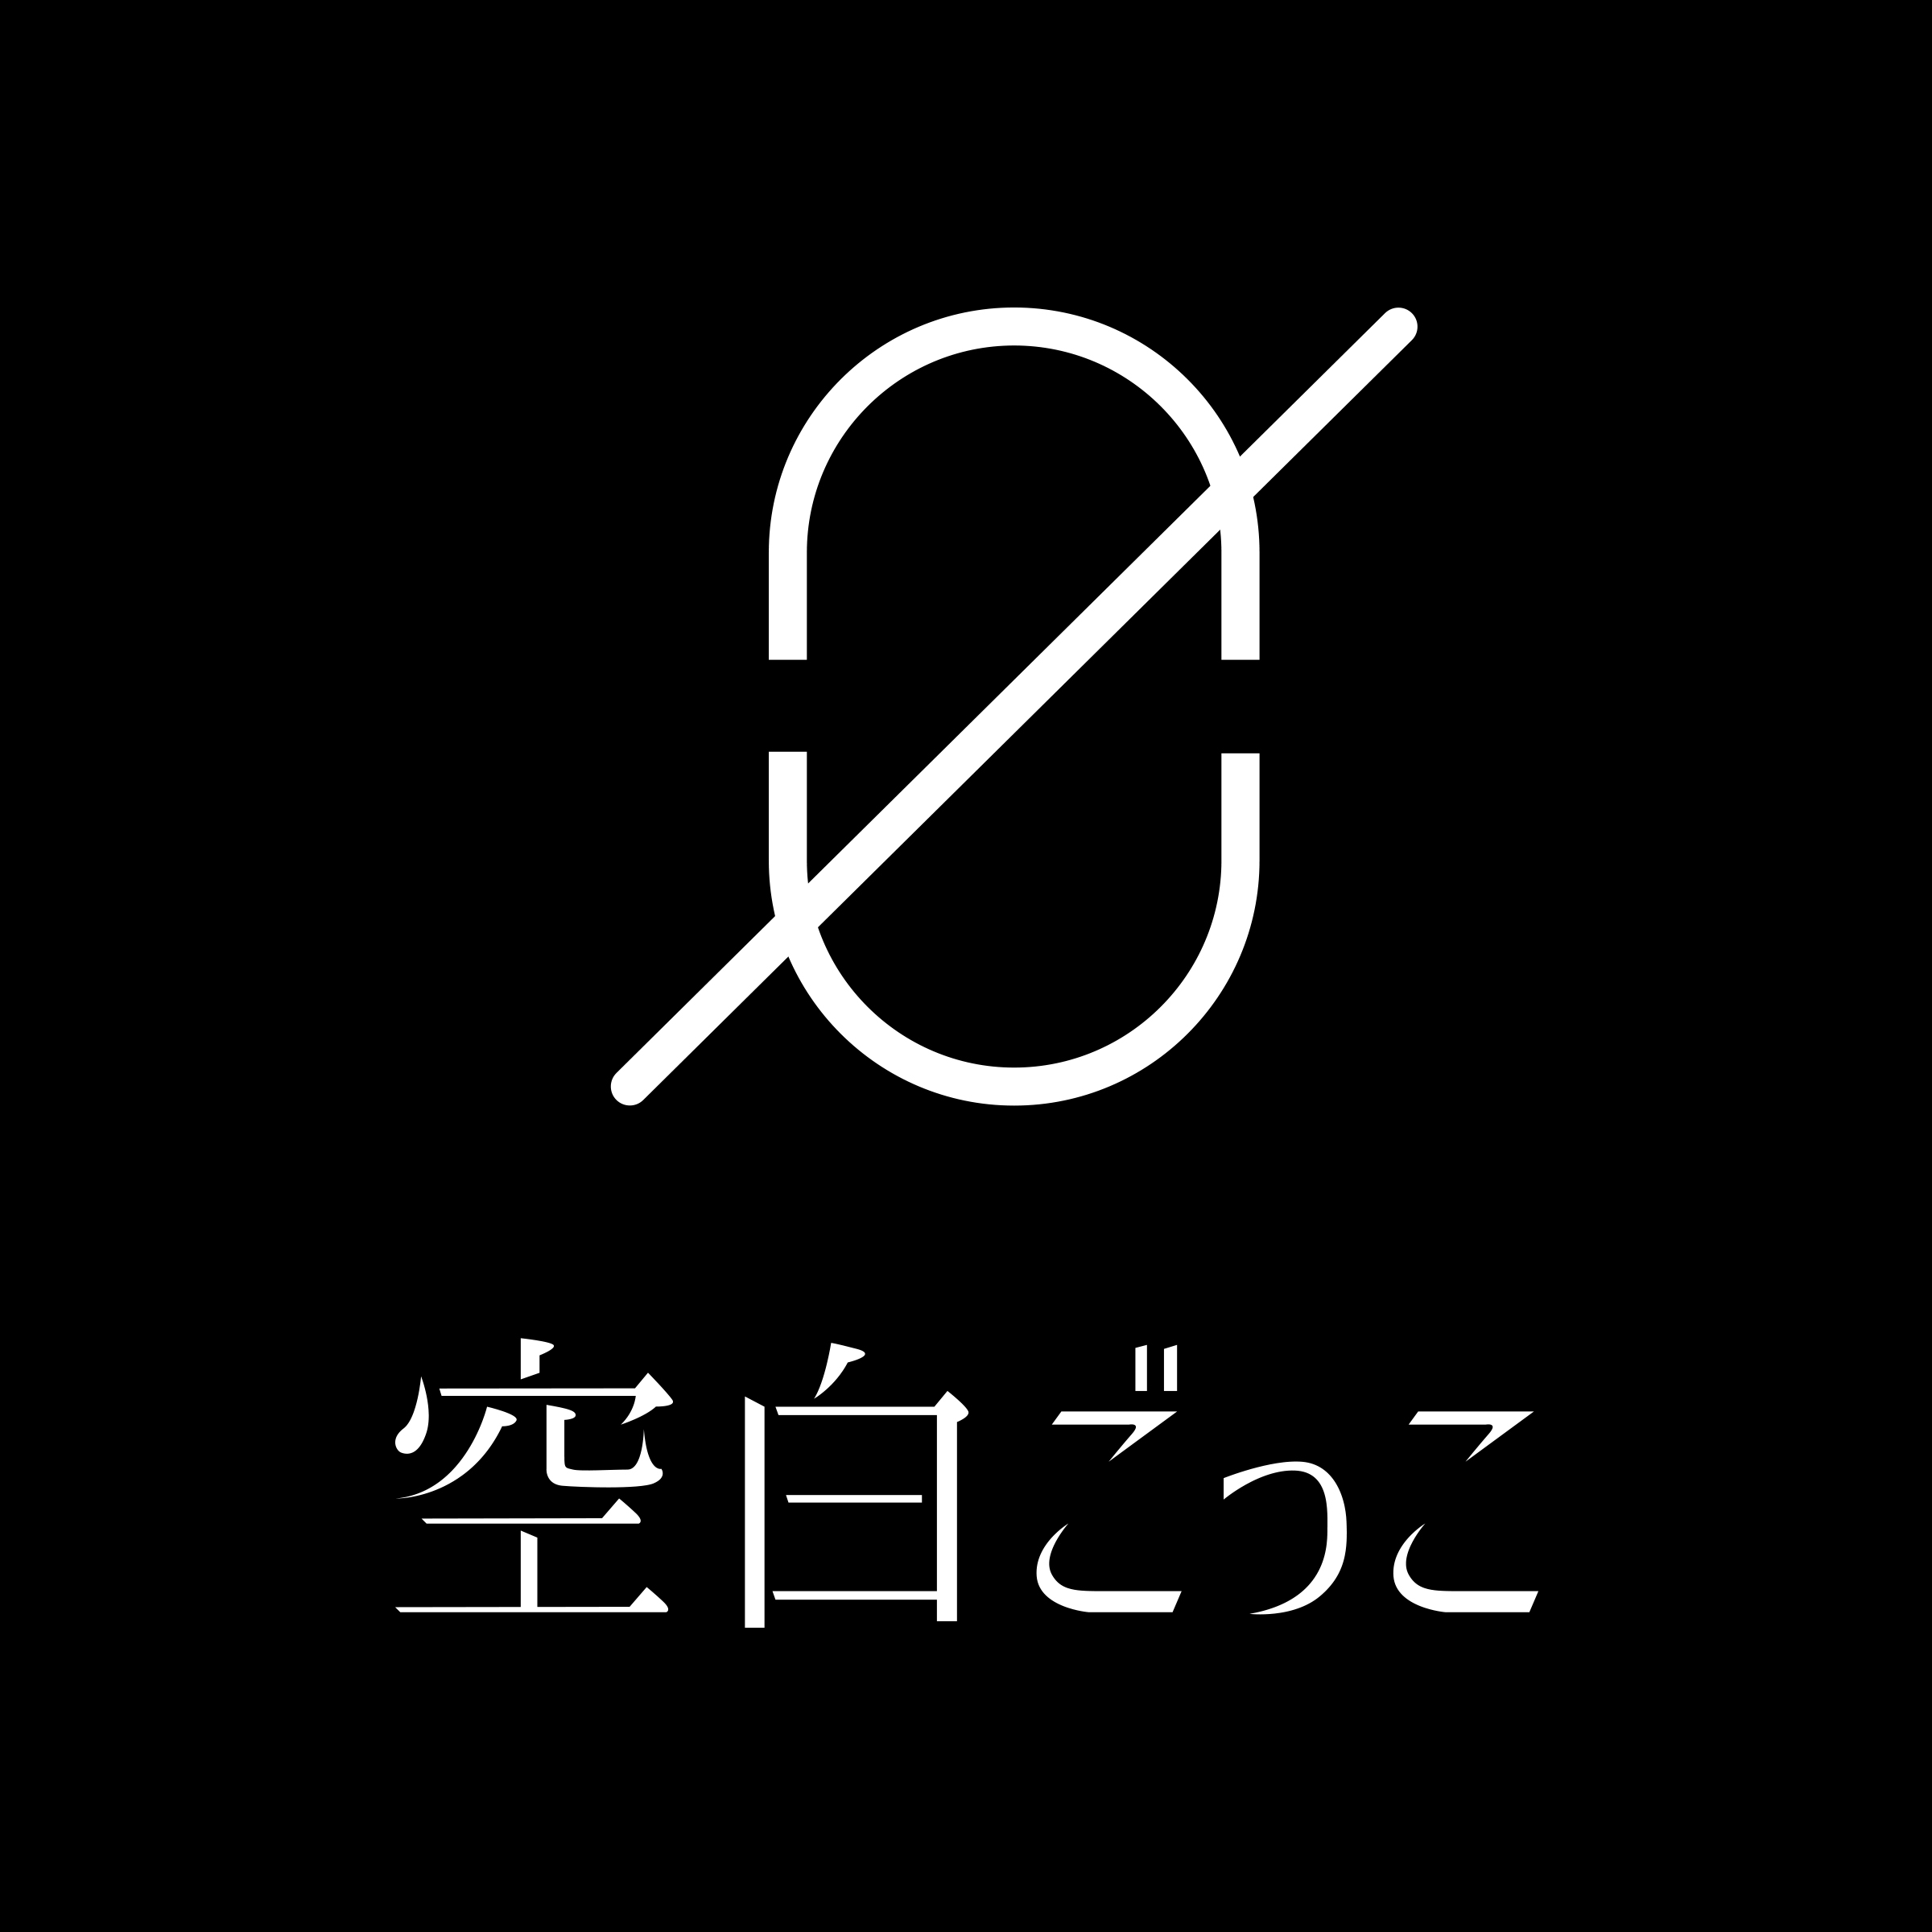 Kuhaku Gokko Limited Version ”Last Strow” (CD+DVD) Release on February16th,2022